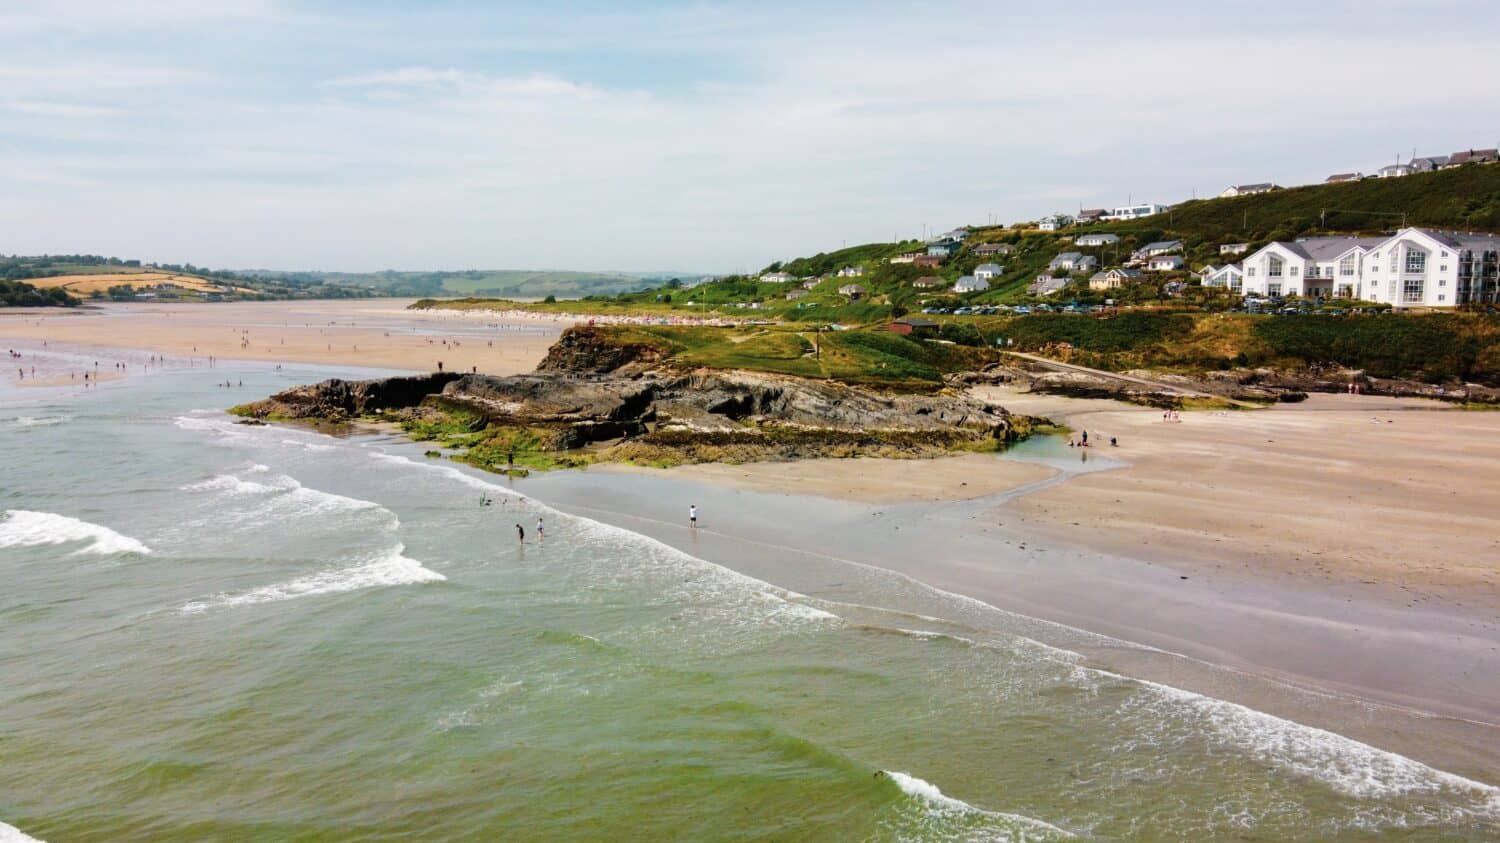 cliff on the coast of Ireland. Virgin Mary headland. Inchydoney is a small island off West Cork, Ireland. The nearest town is Clonakilty. It has a Blue Flag beach.